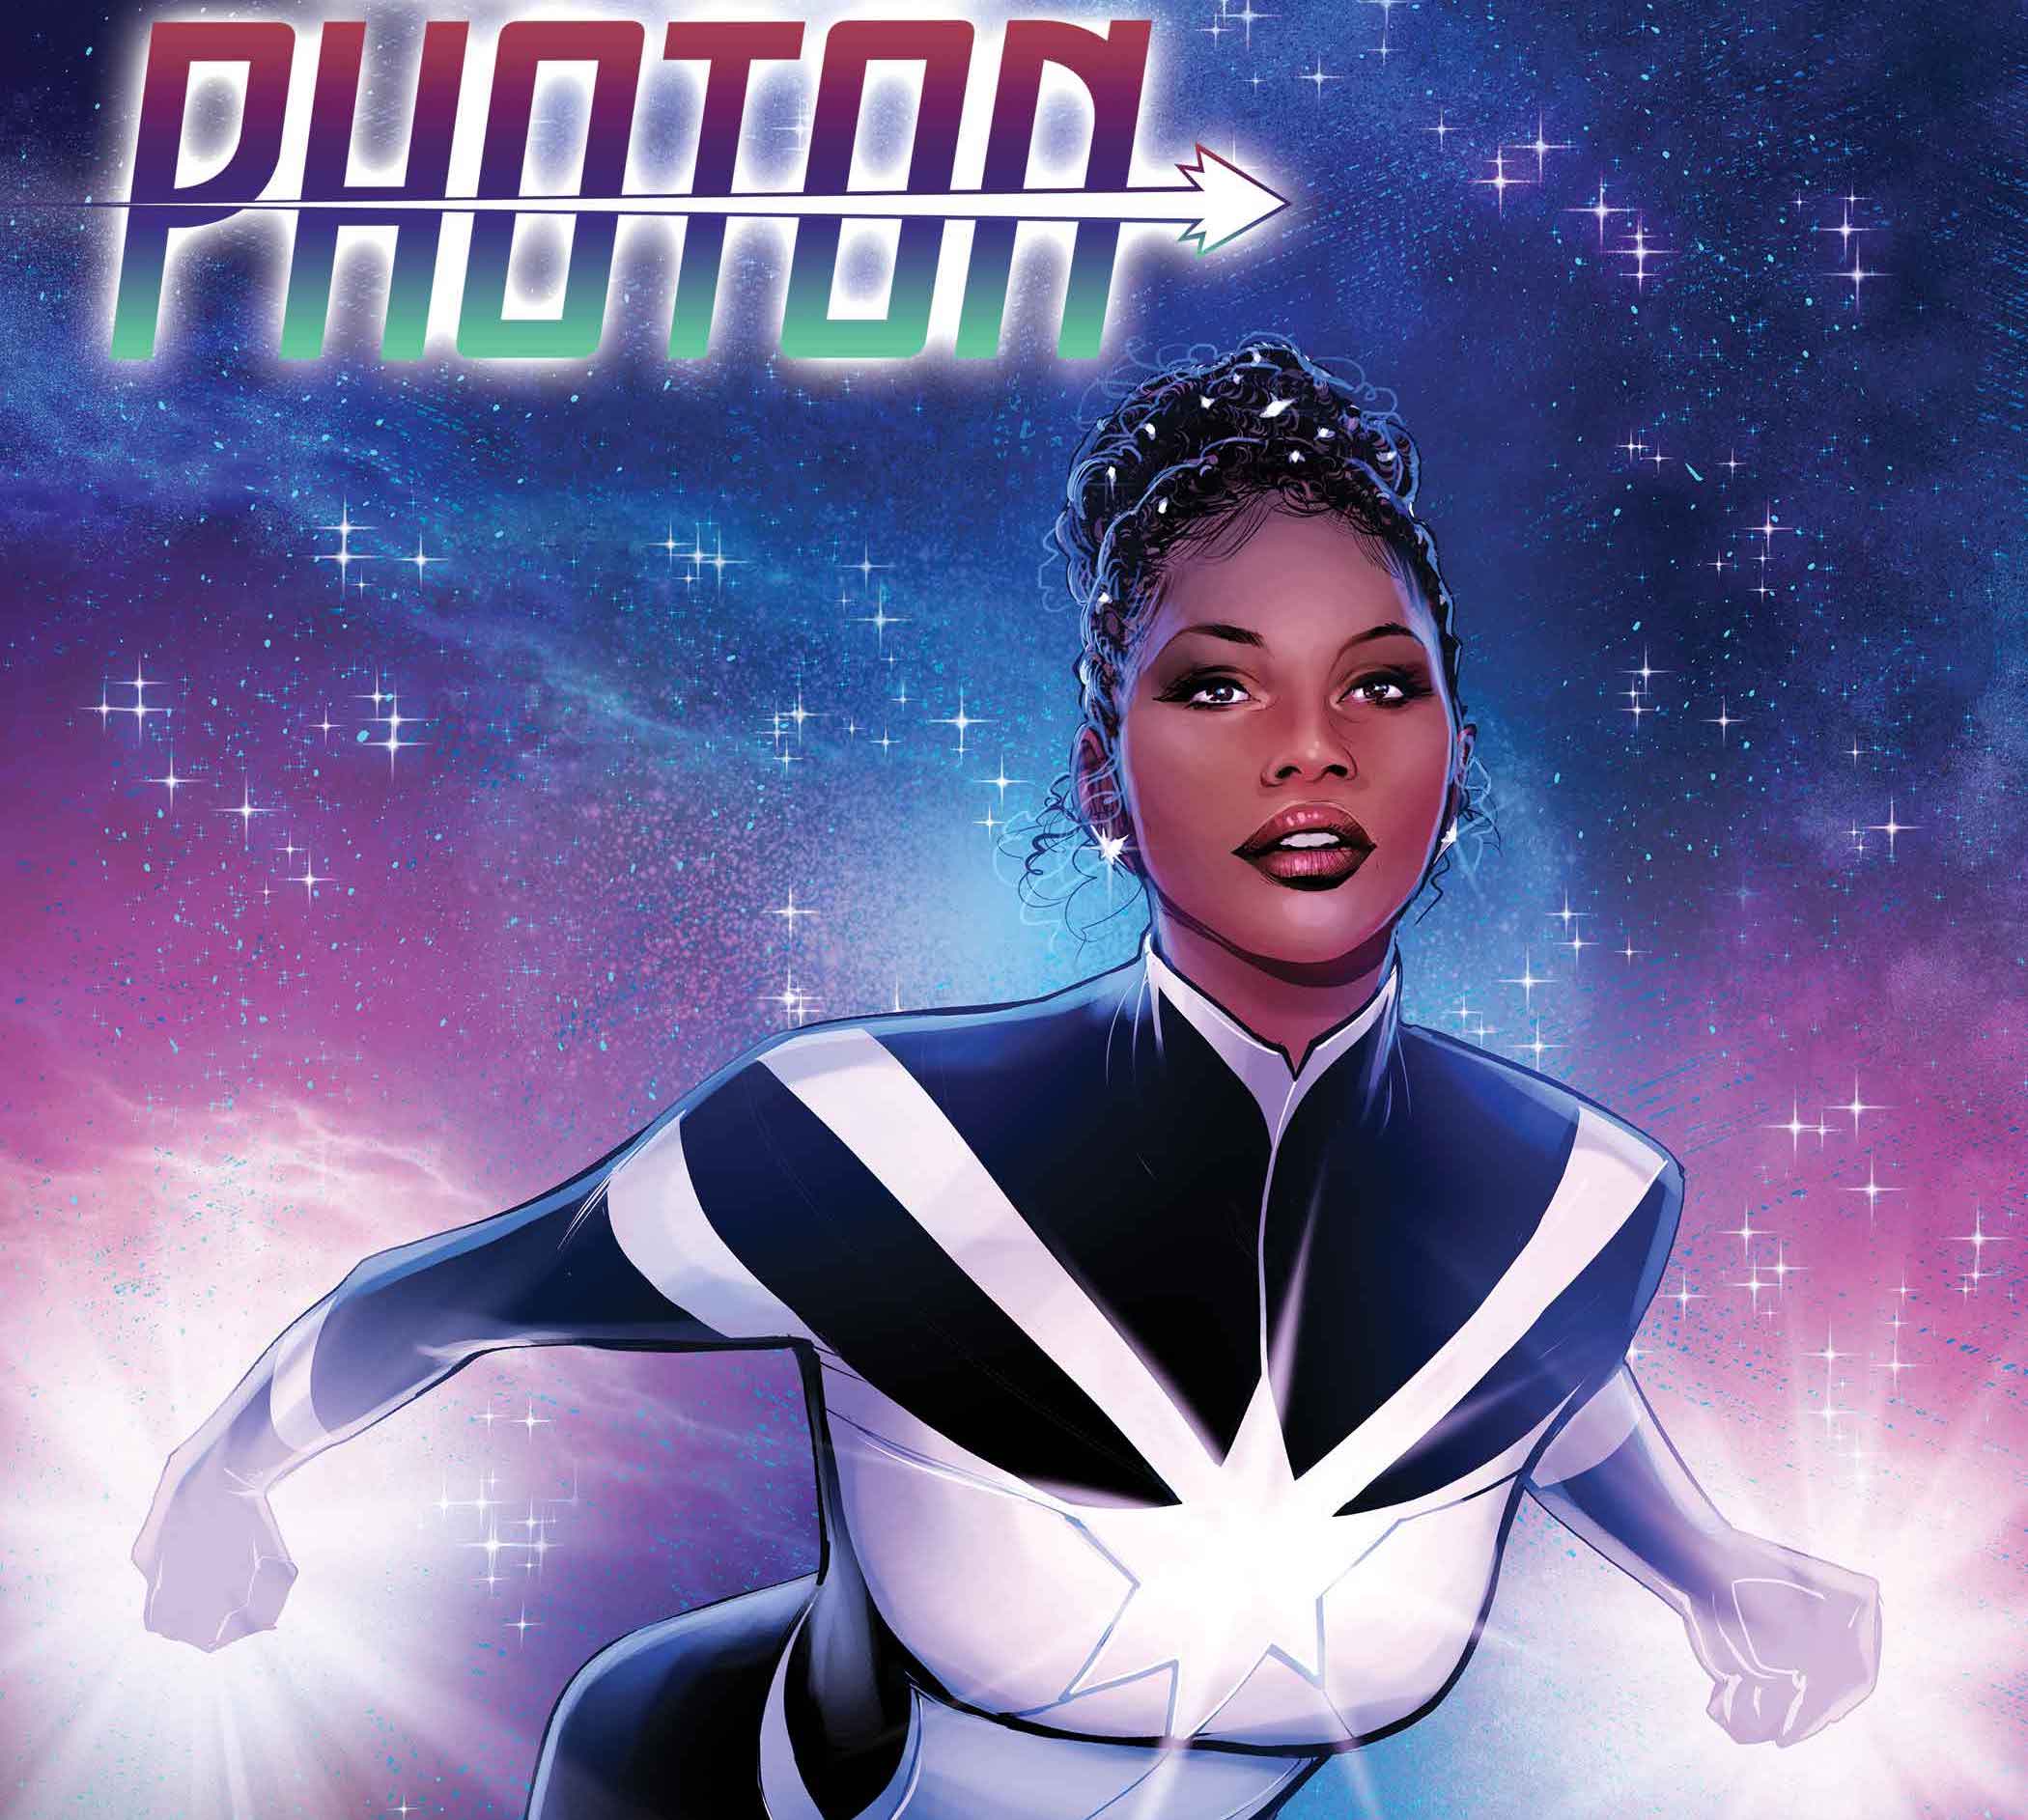 'Monica Rambeau: Photon' #1 establishes the complex life of ex-Captain Marvel